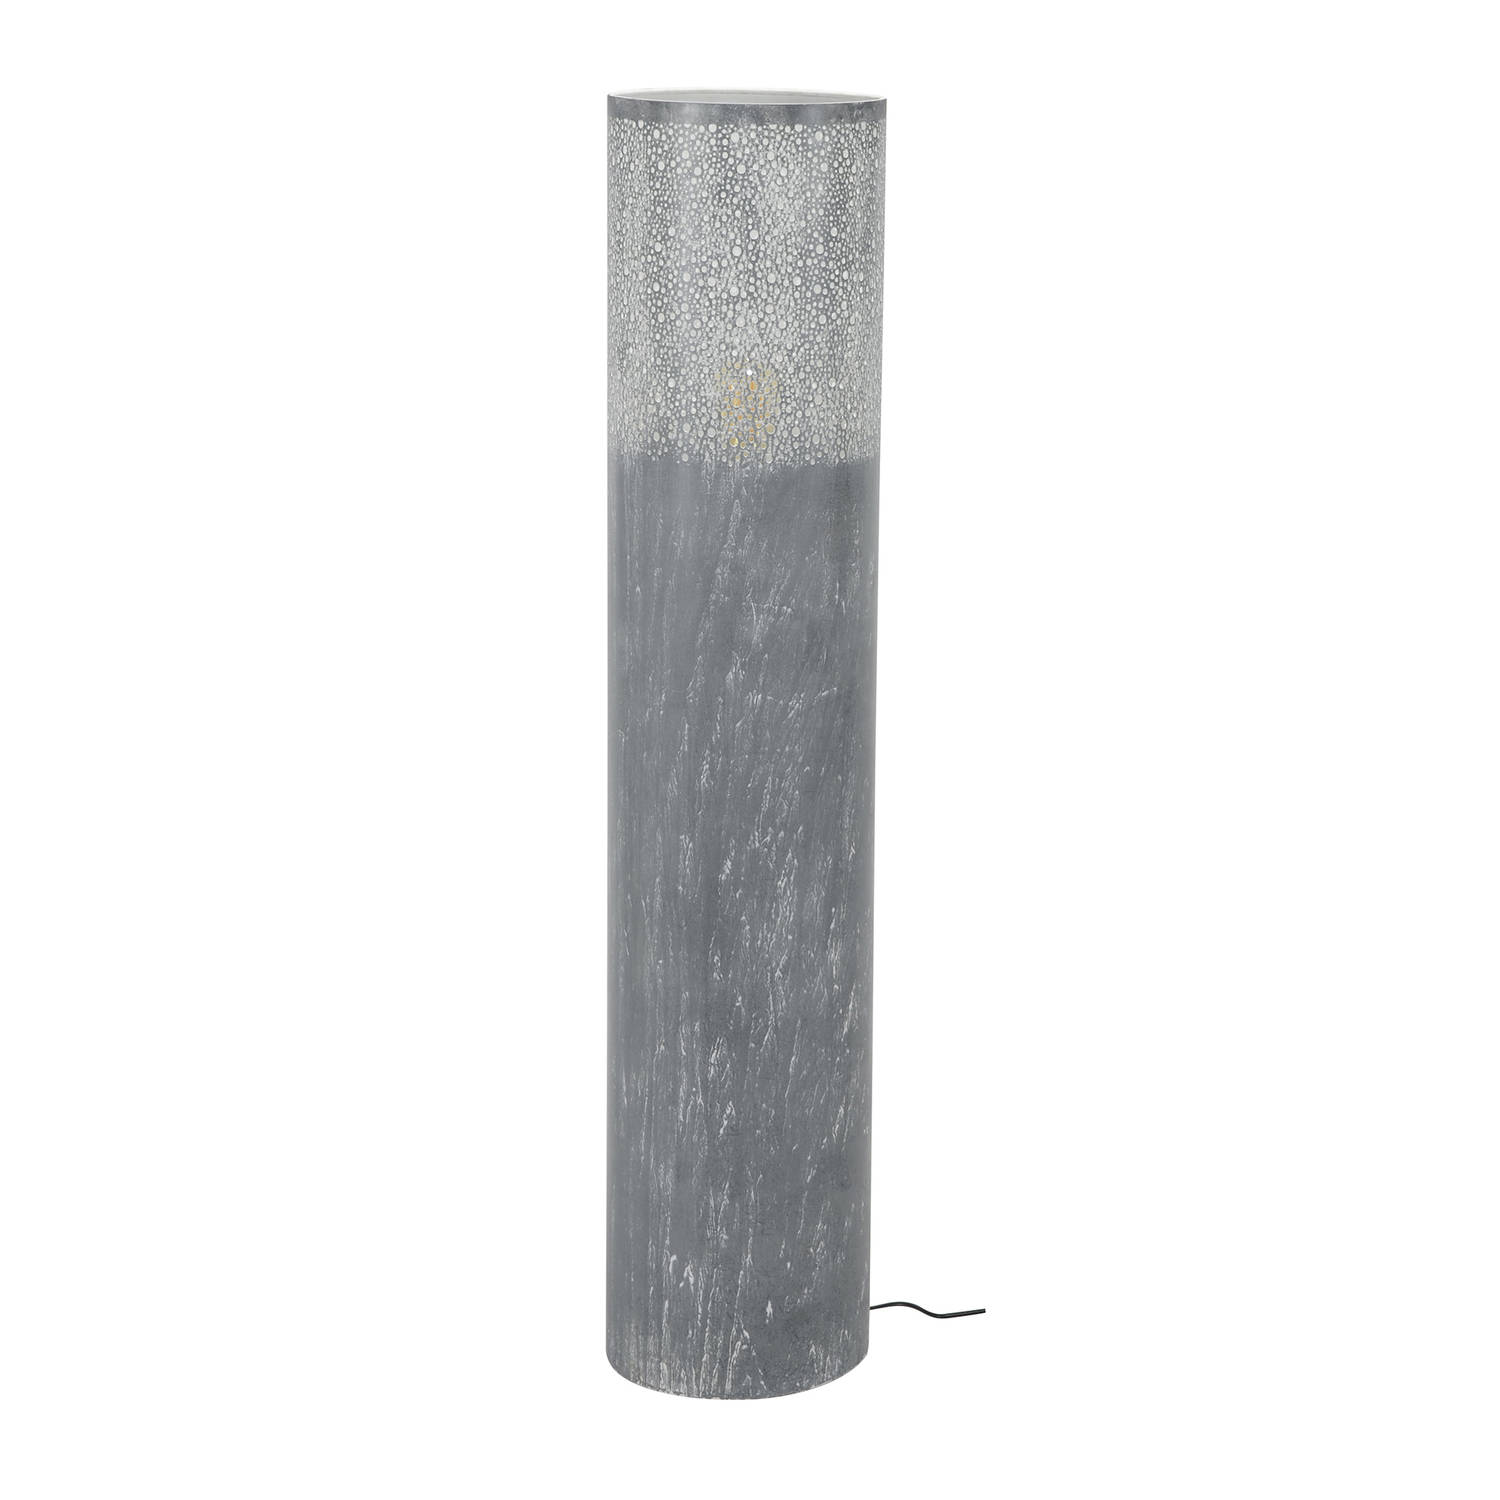 Giga Meubel Gm Vloerlamp Cilinder - Metaal - Betonlook - Ø25xh120cm